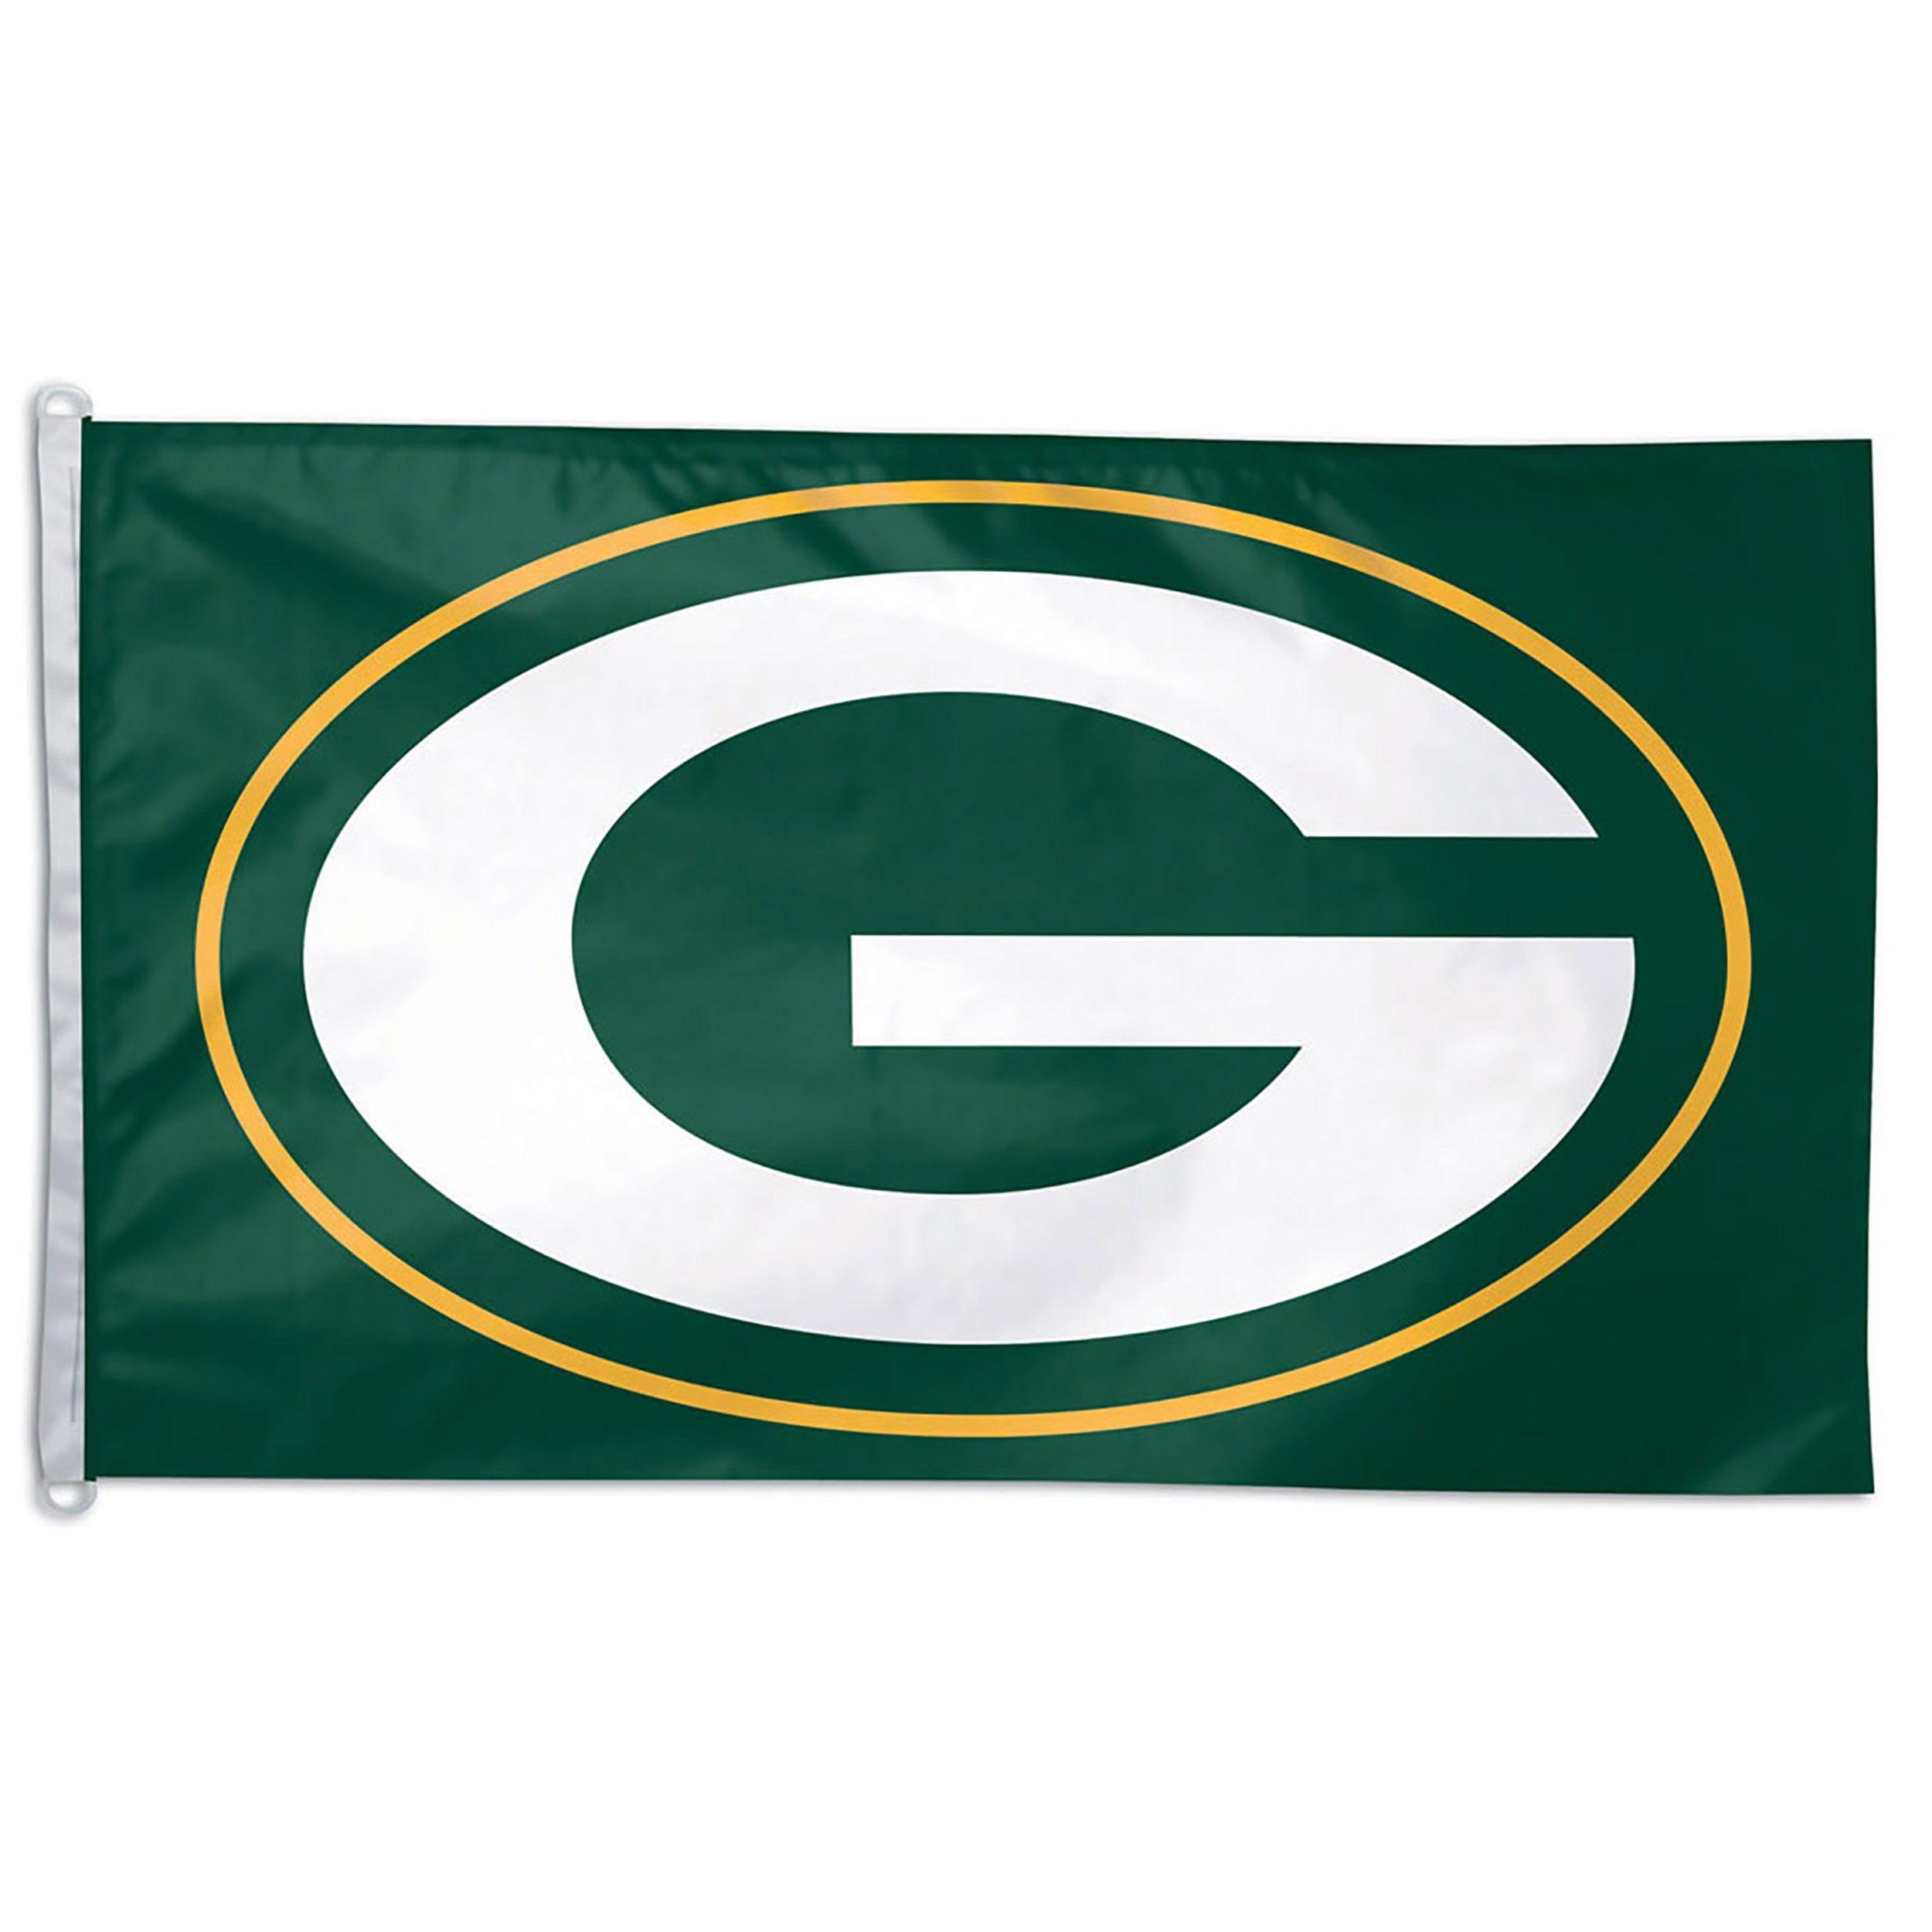 Greenbay Logo - Green Bay Packers 'G' Logo 3' x 5' Flag